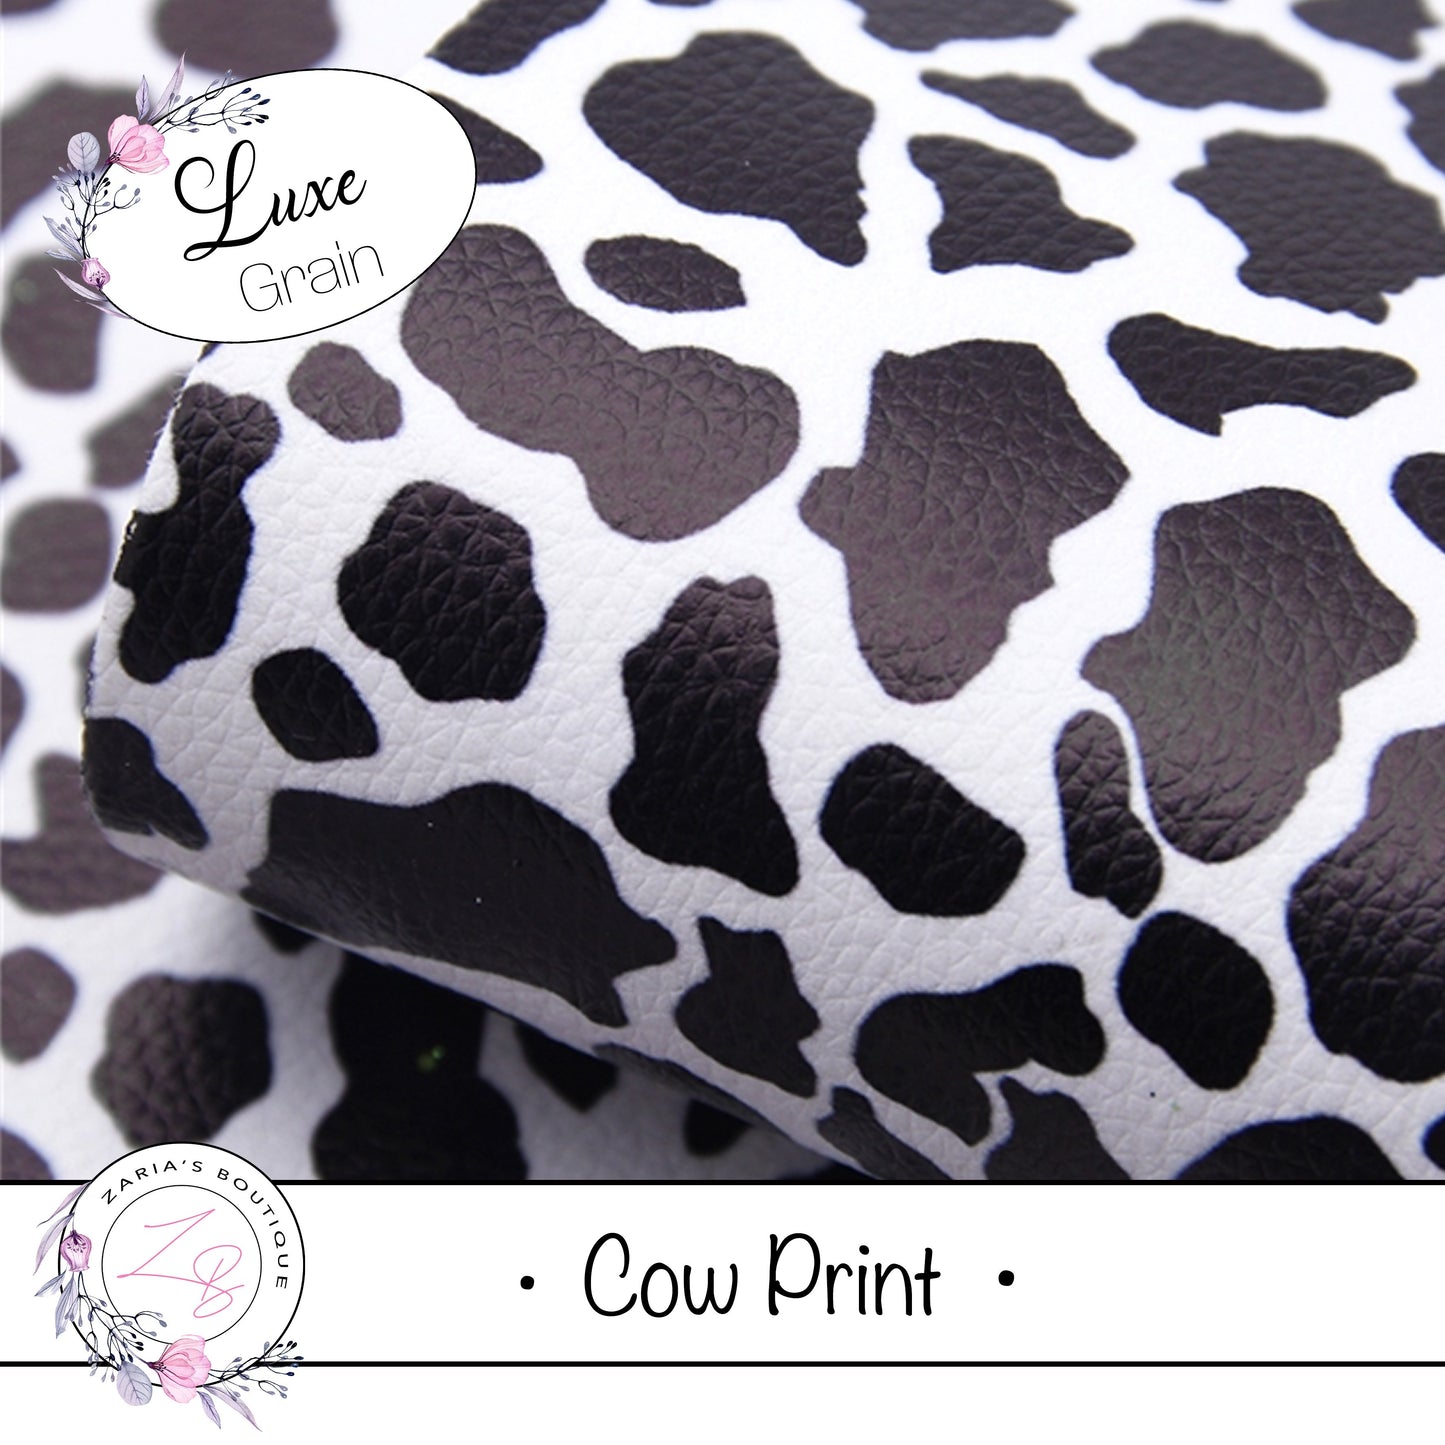 ⋅ Farm Girl Paisley ⋅ Cow Hide Print ⋅ Textured Leather ⋅